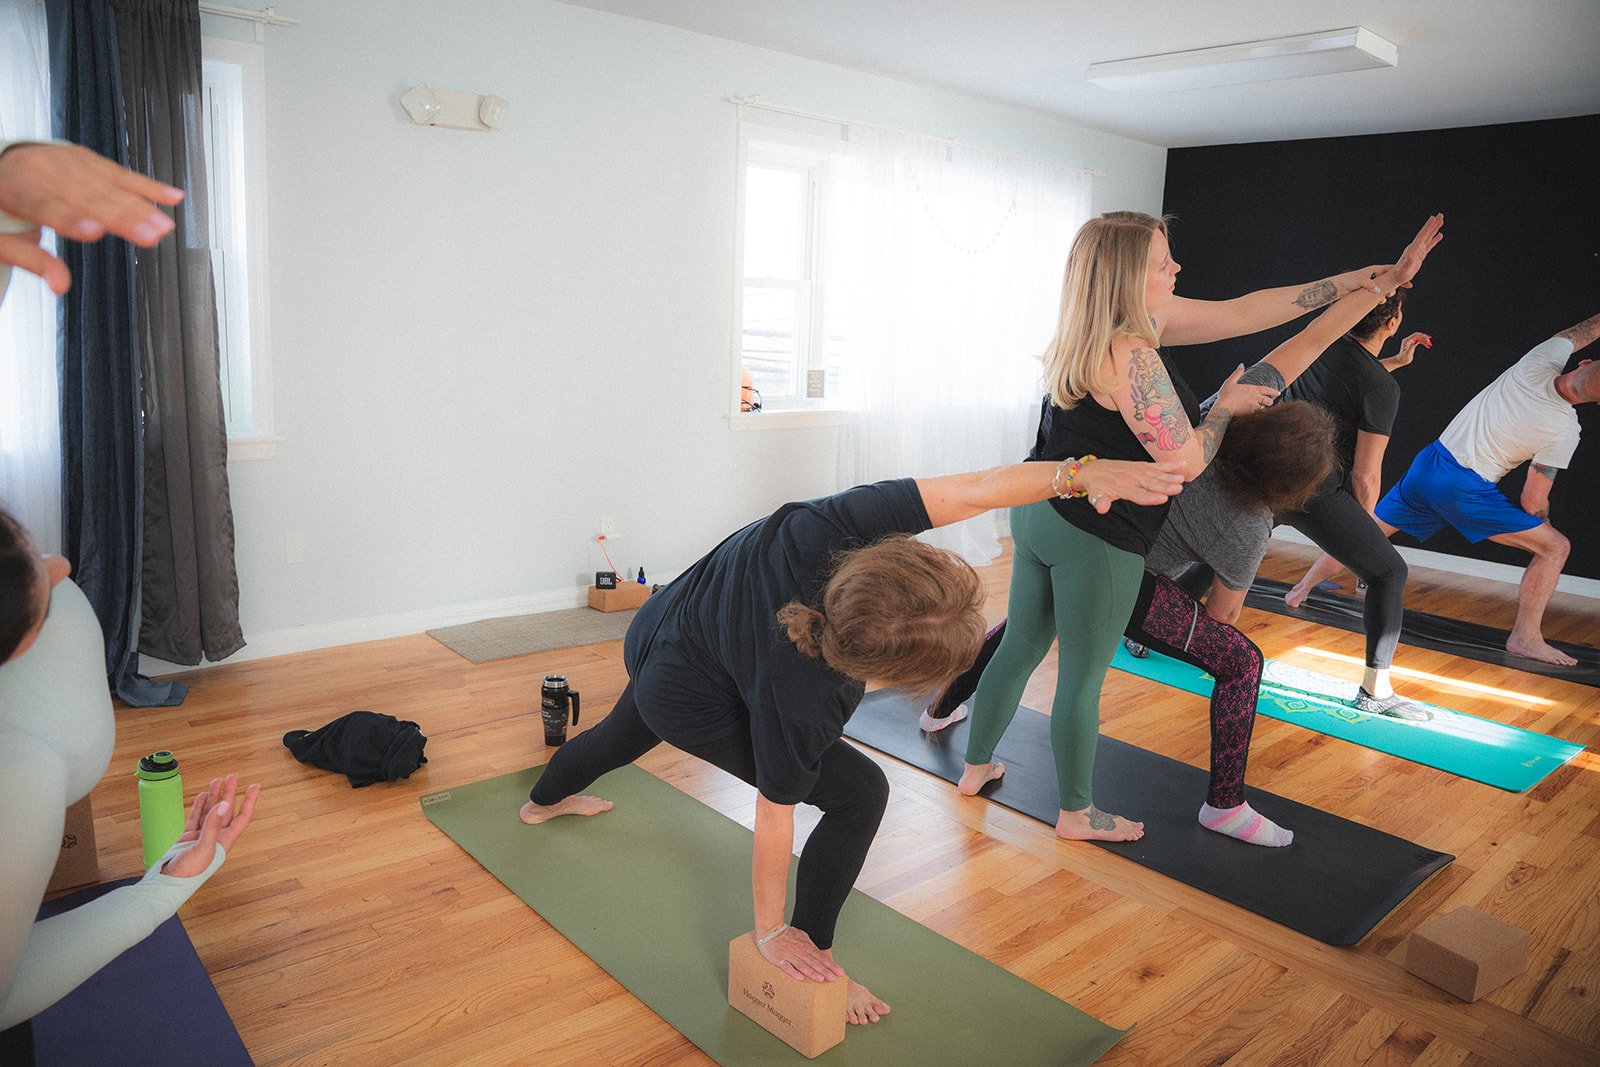 Can beginners do Ashtanga Yoga? — Lauren R. Yoga